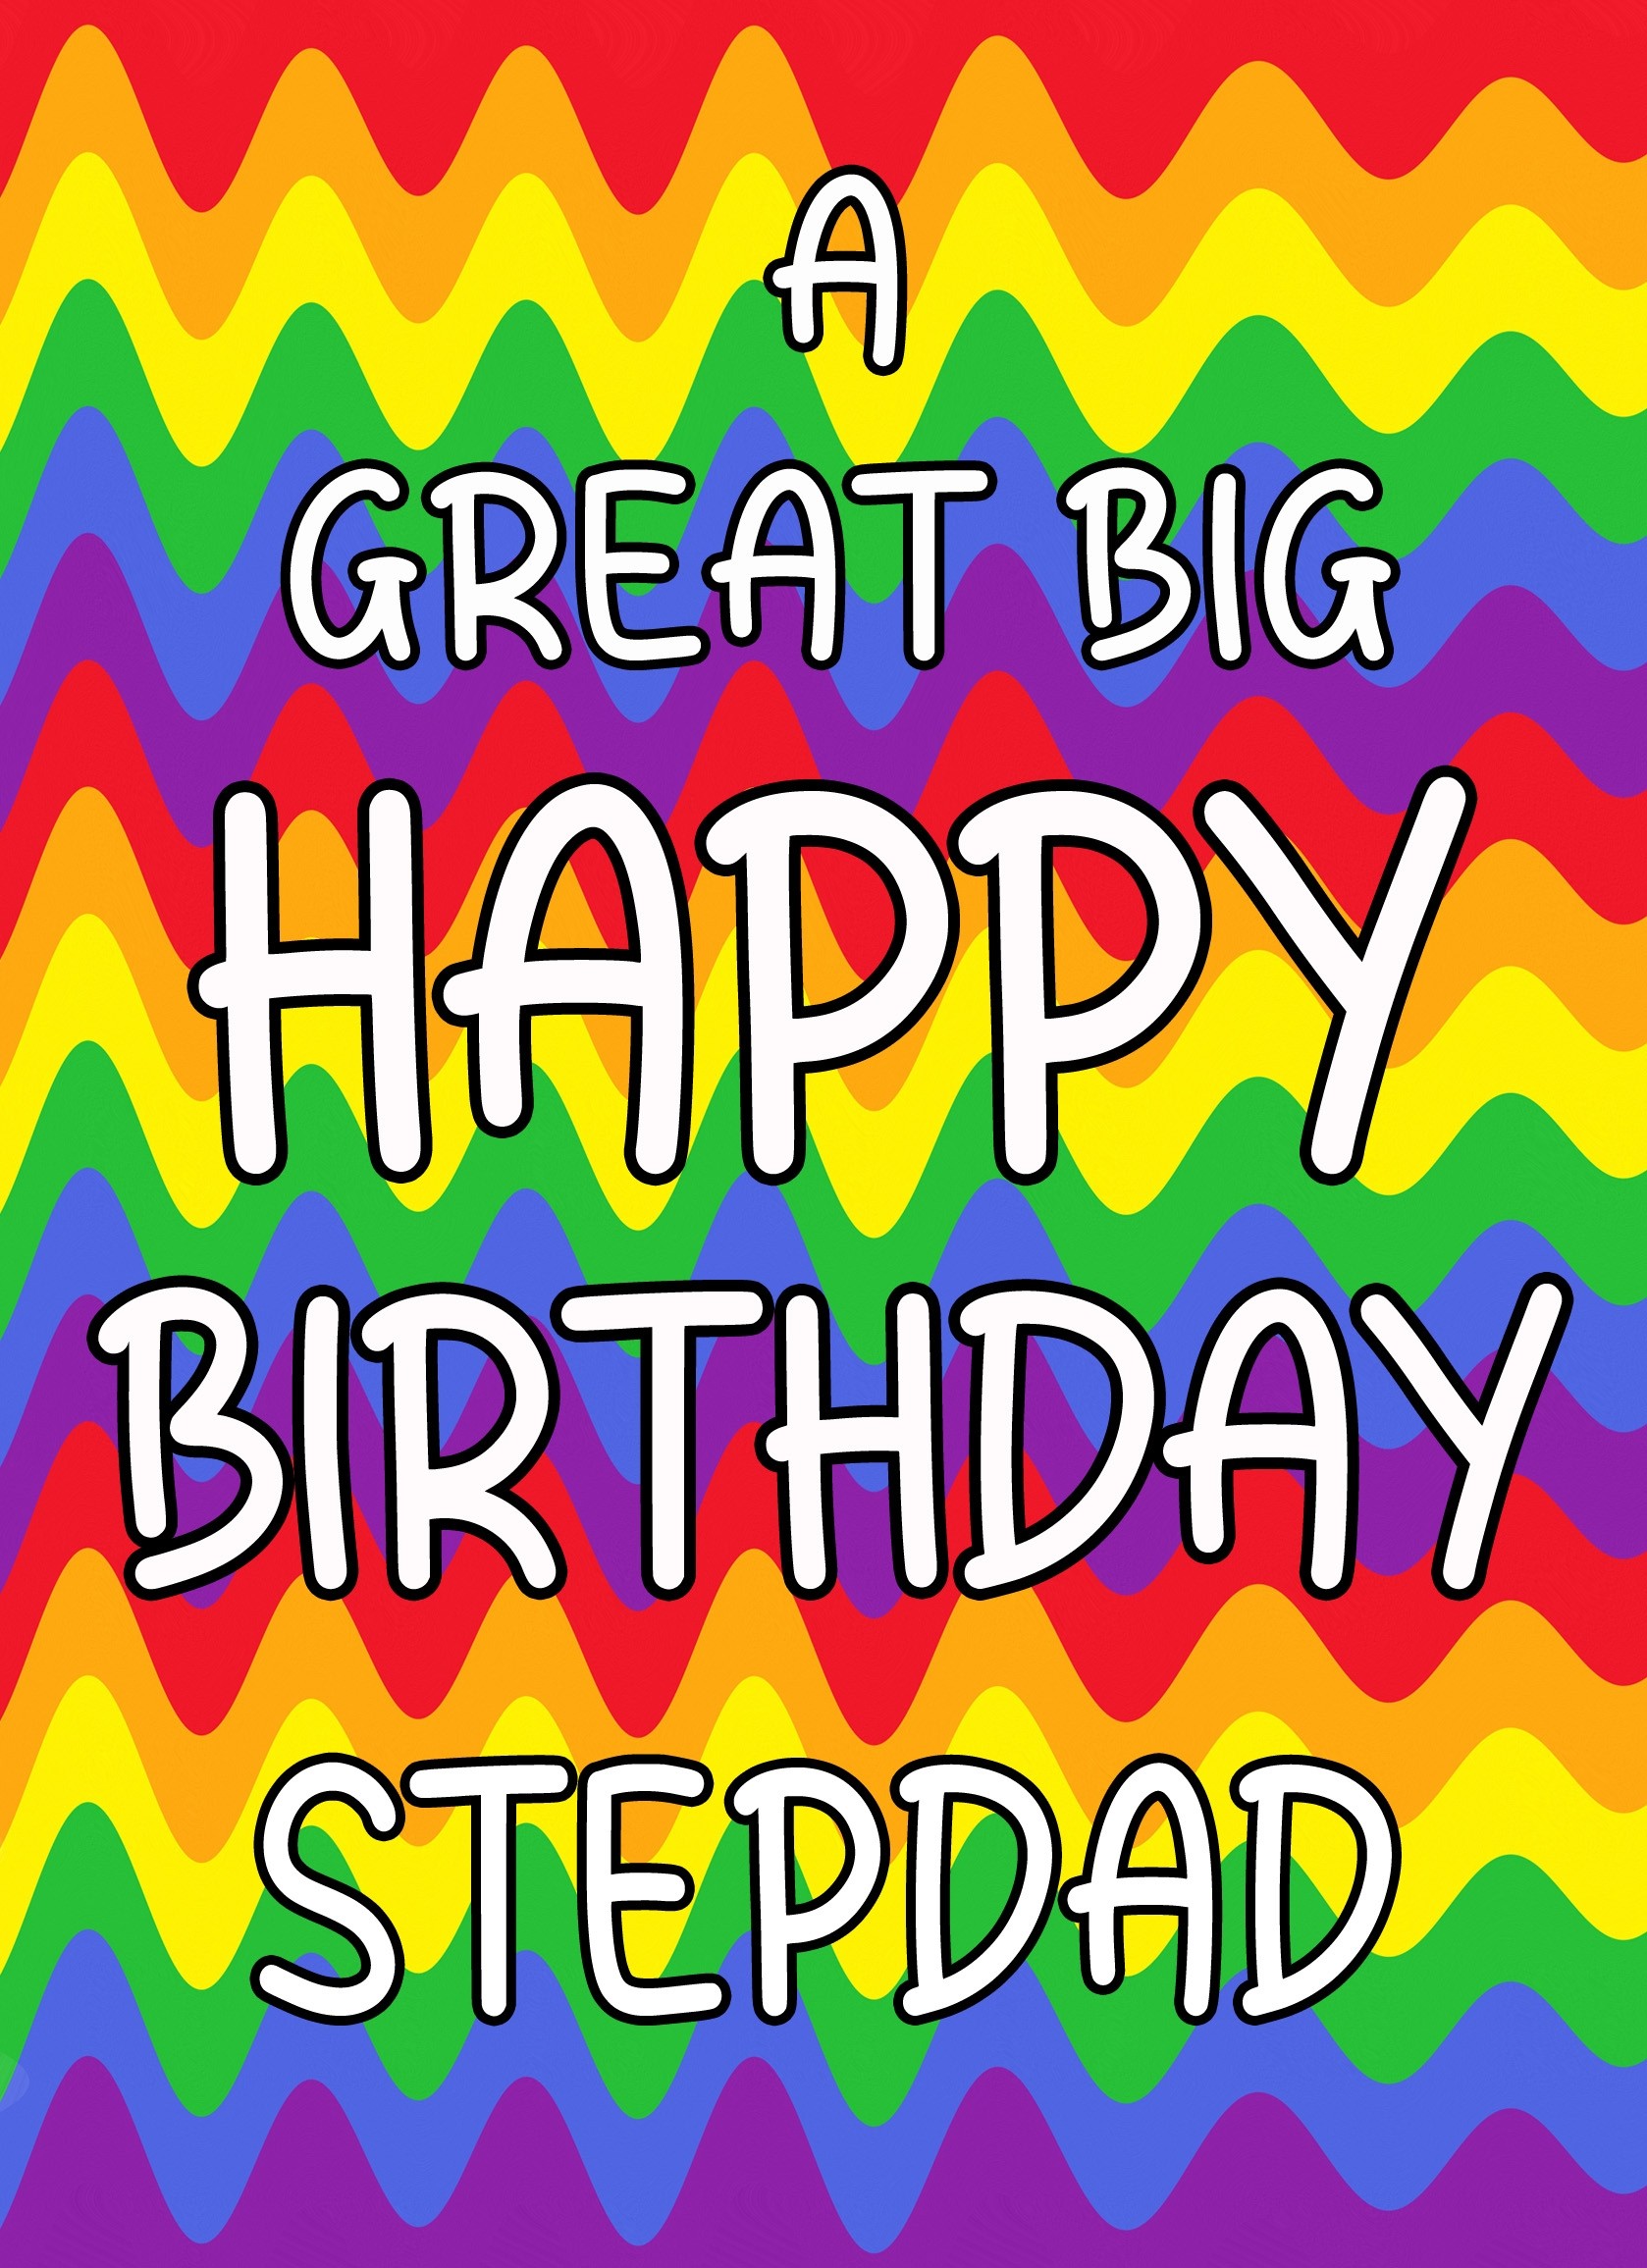 Happy Birthday 'Step Dad' Greeting Card (Rainbow)